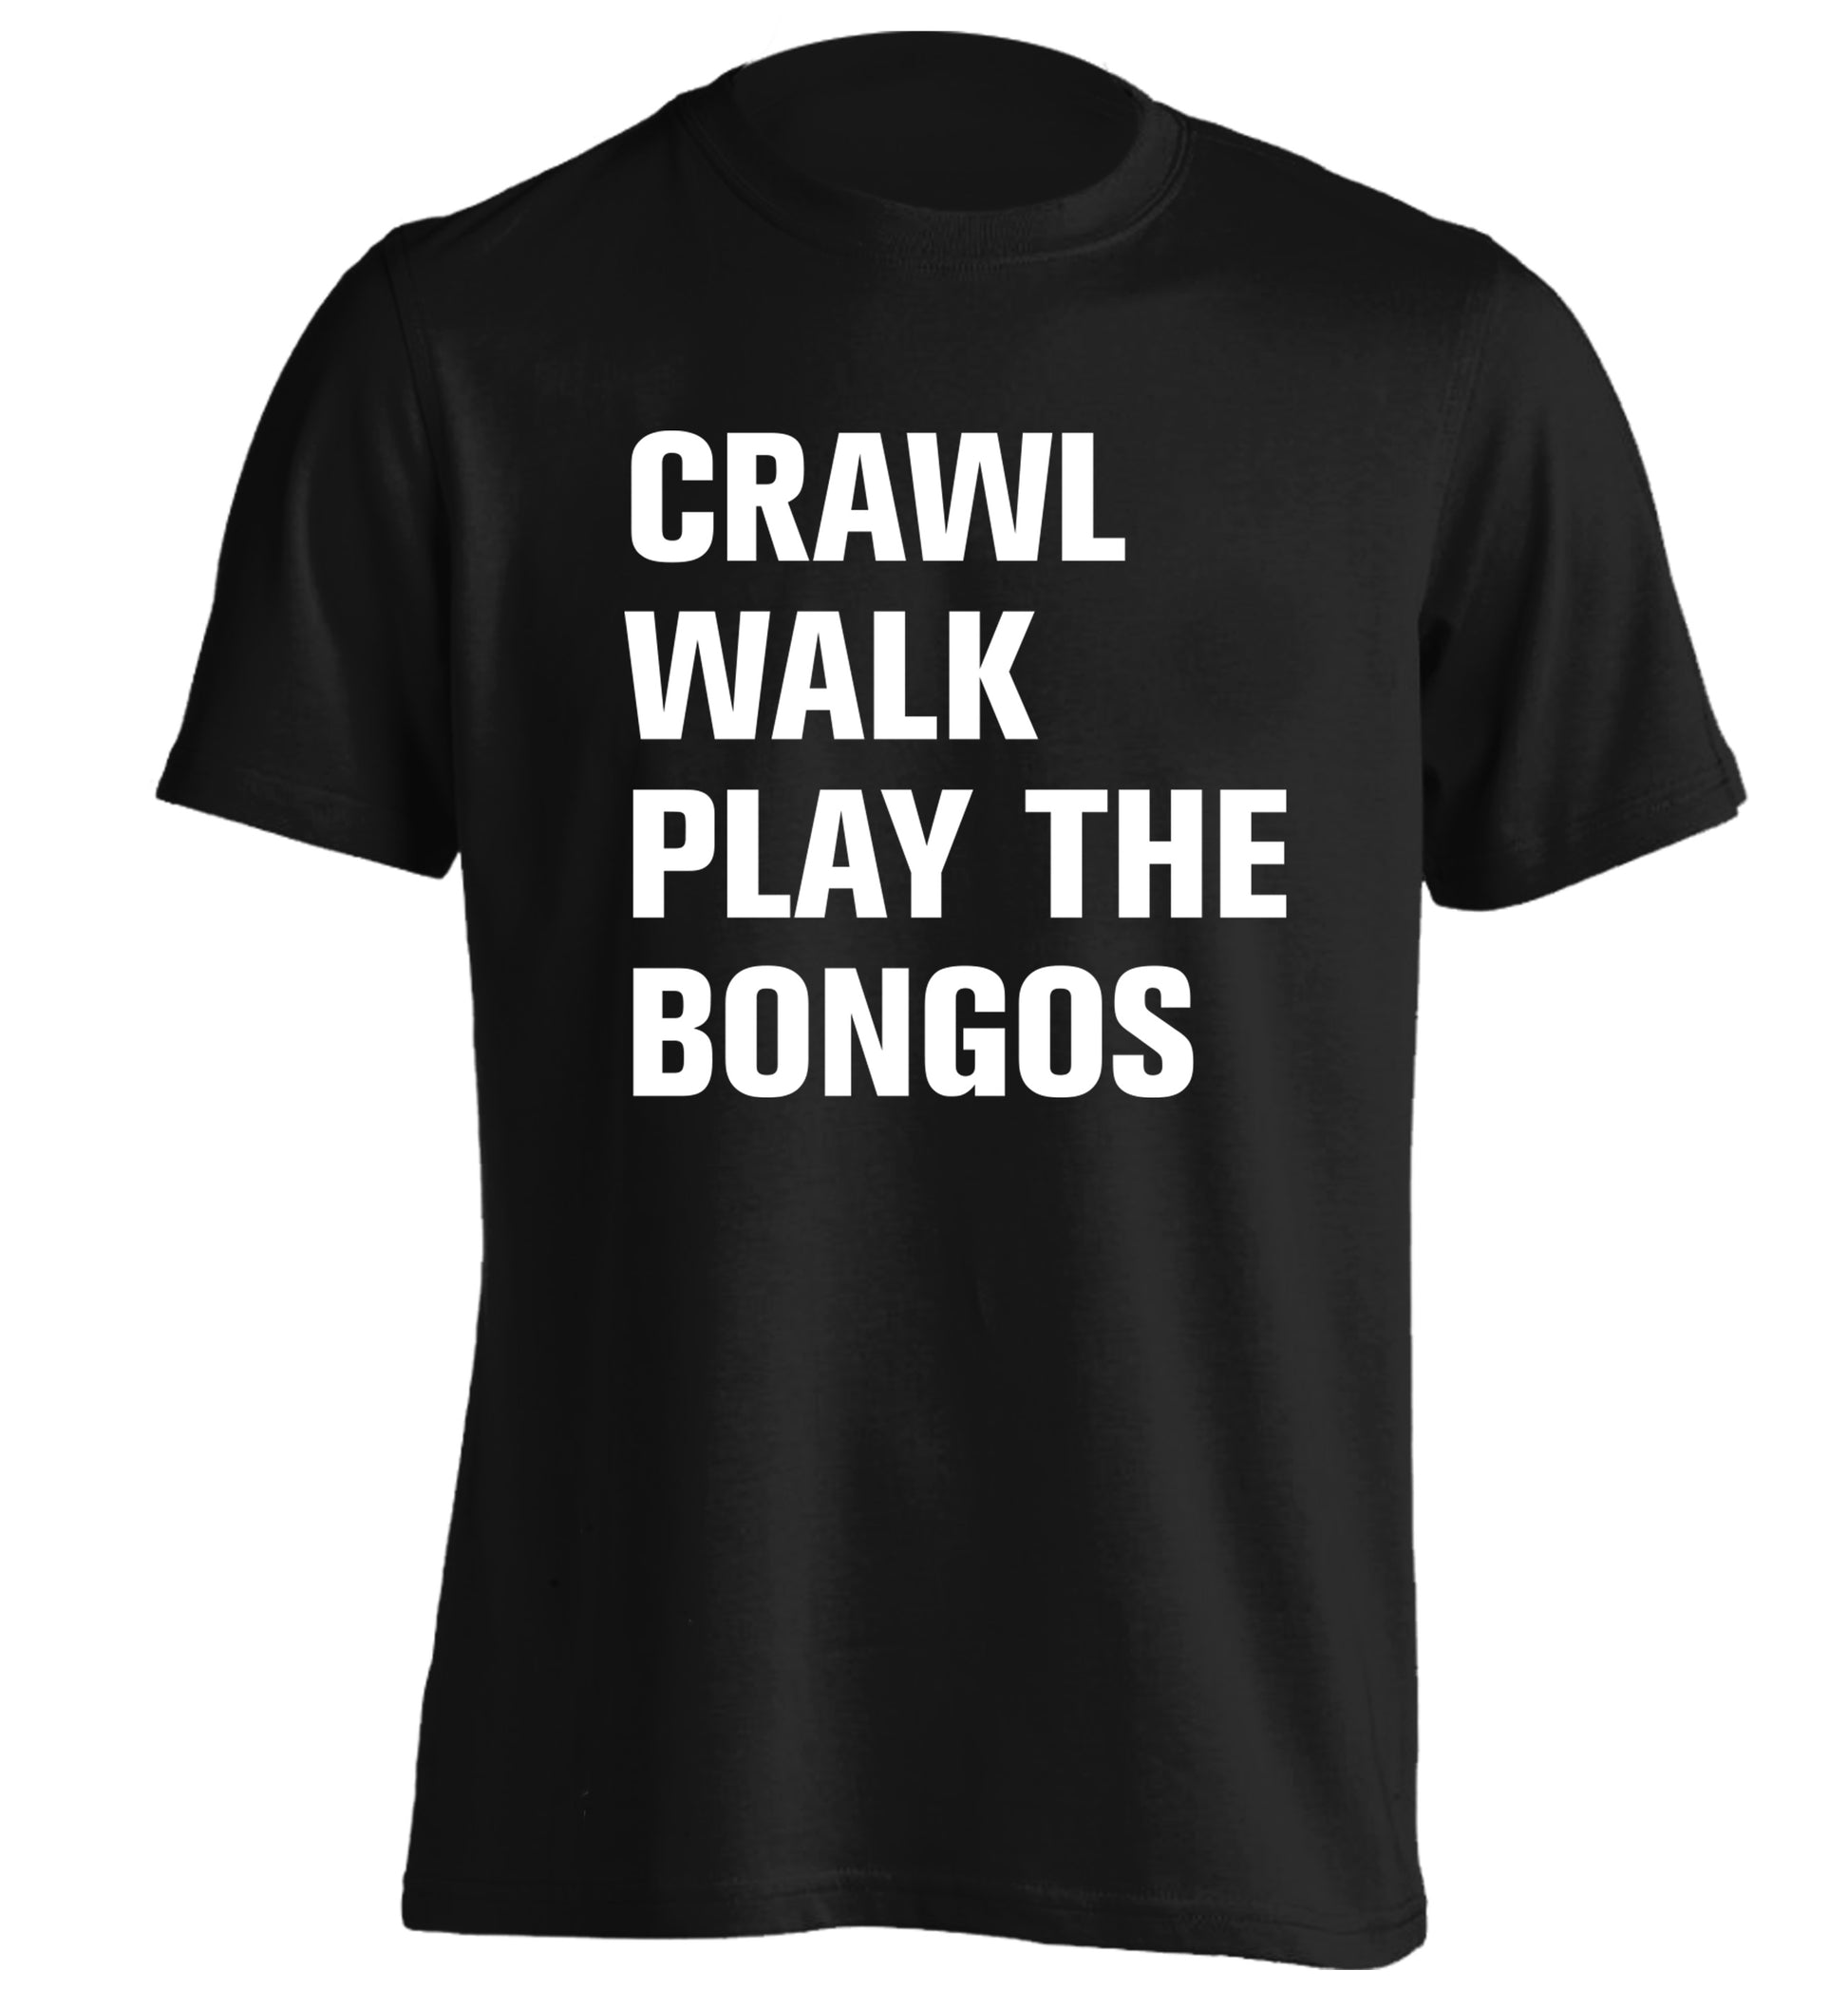 Crawl Walk Play Bongos adults unisex black Tshirt 2XL